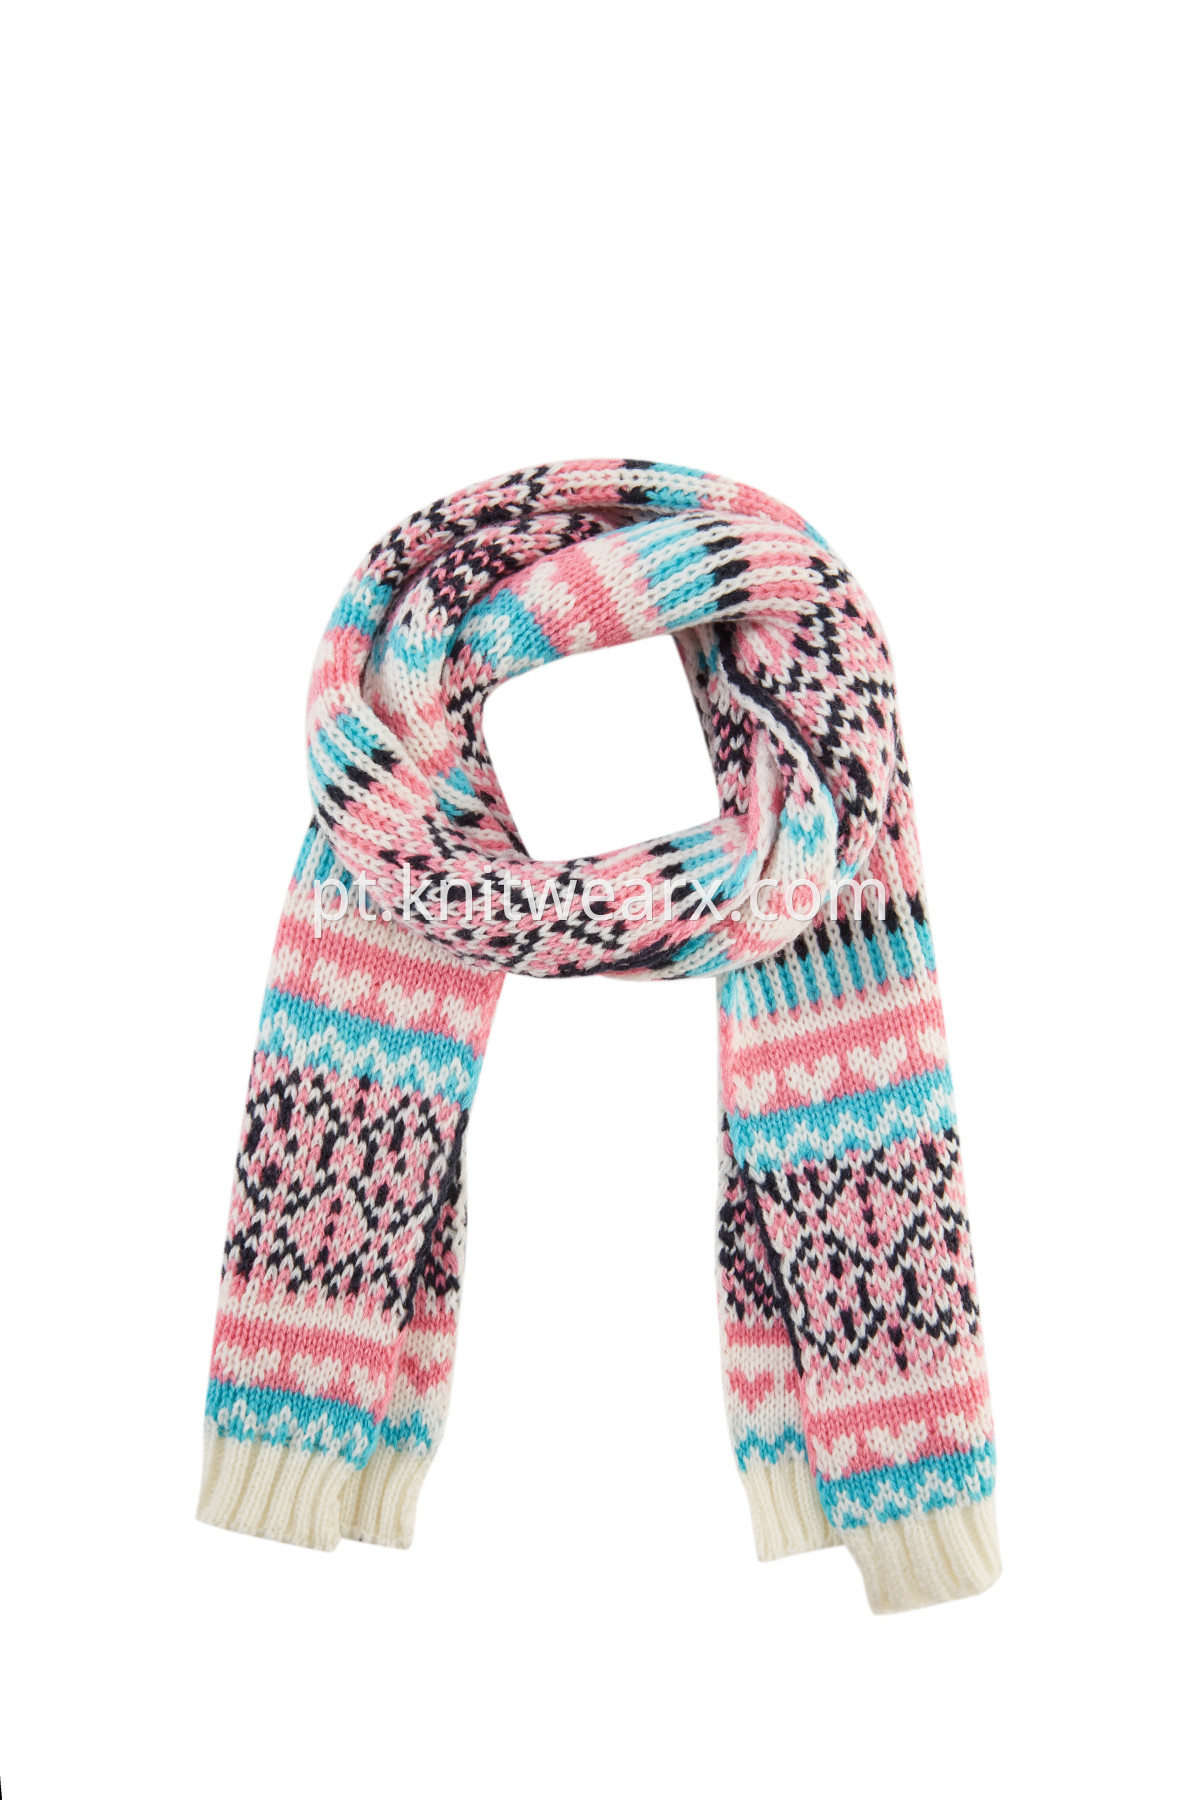 Girls's Snow Winter Warm Scarves Jacquard Knit Christmas